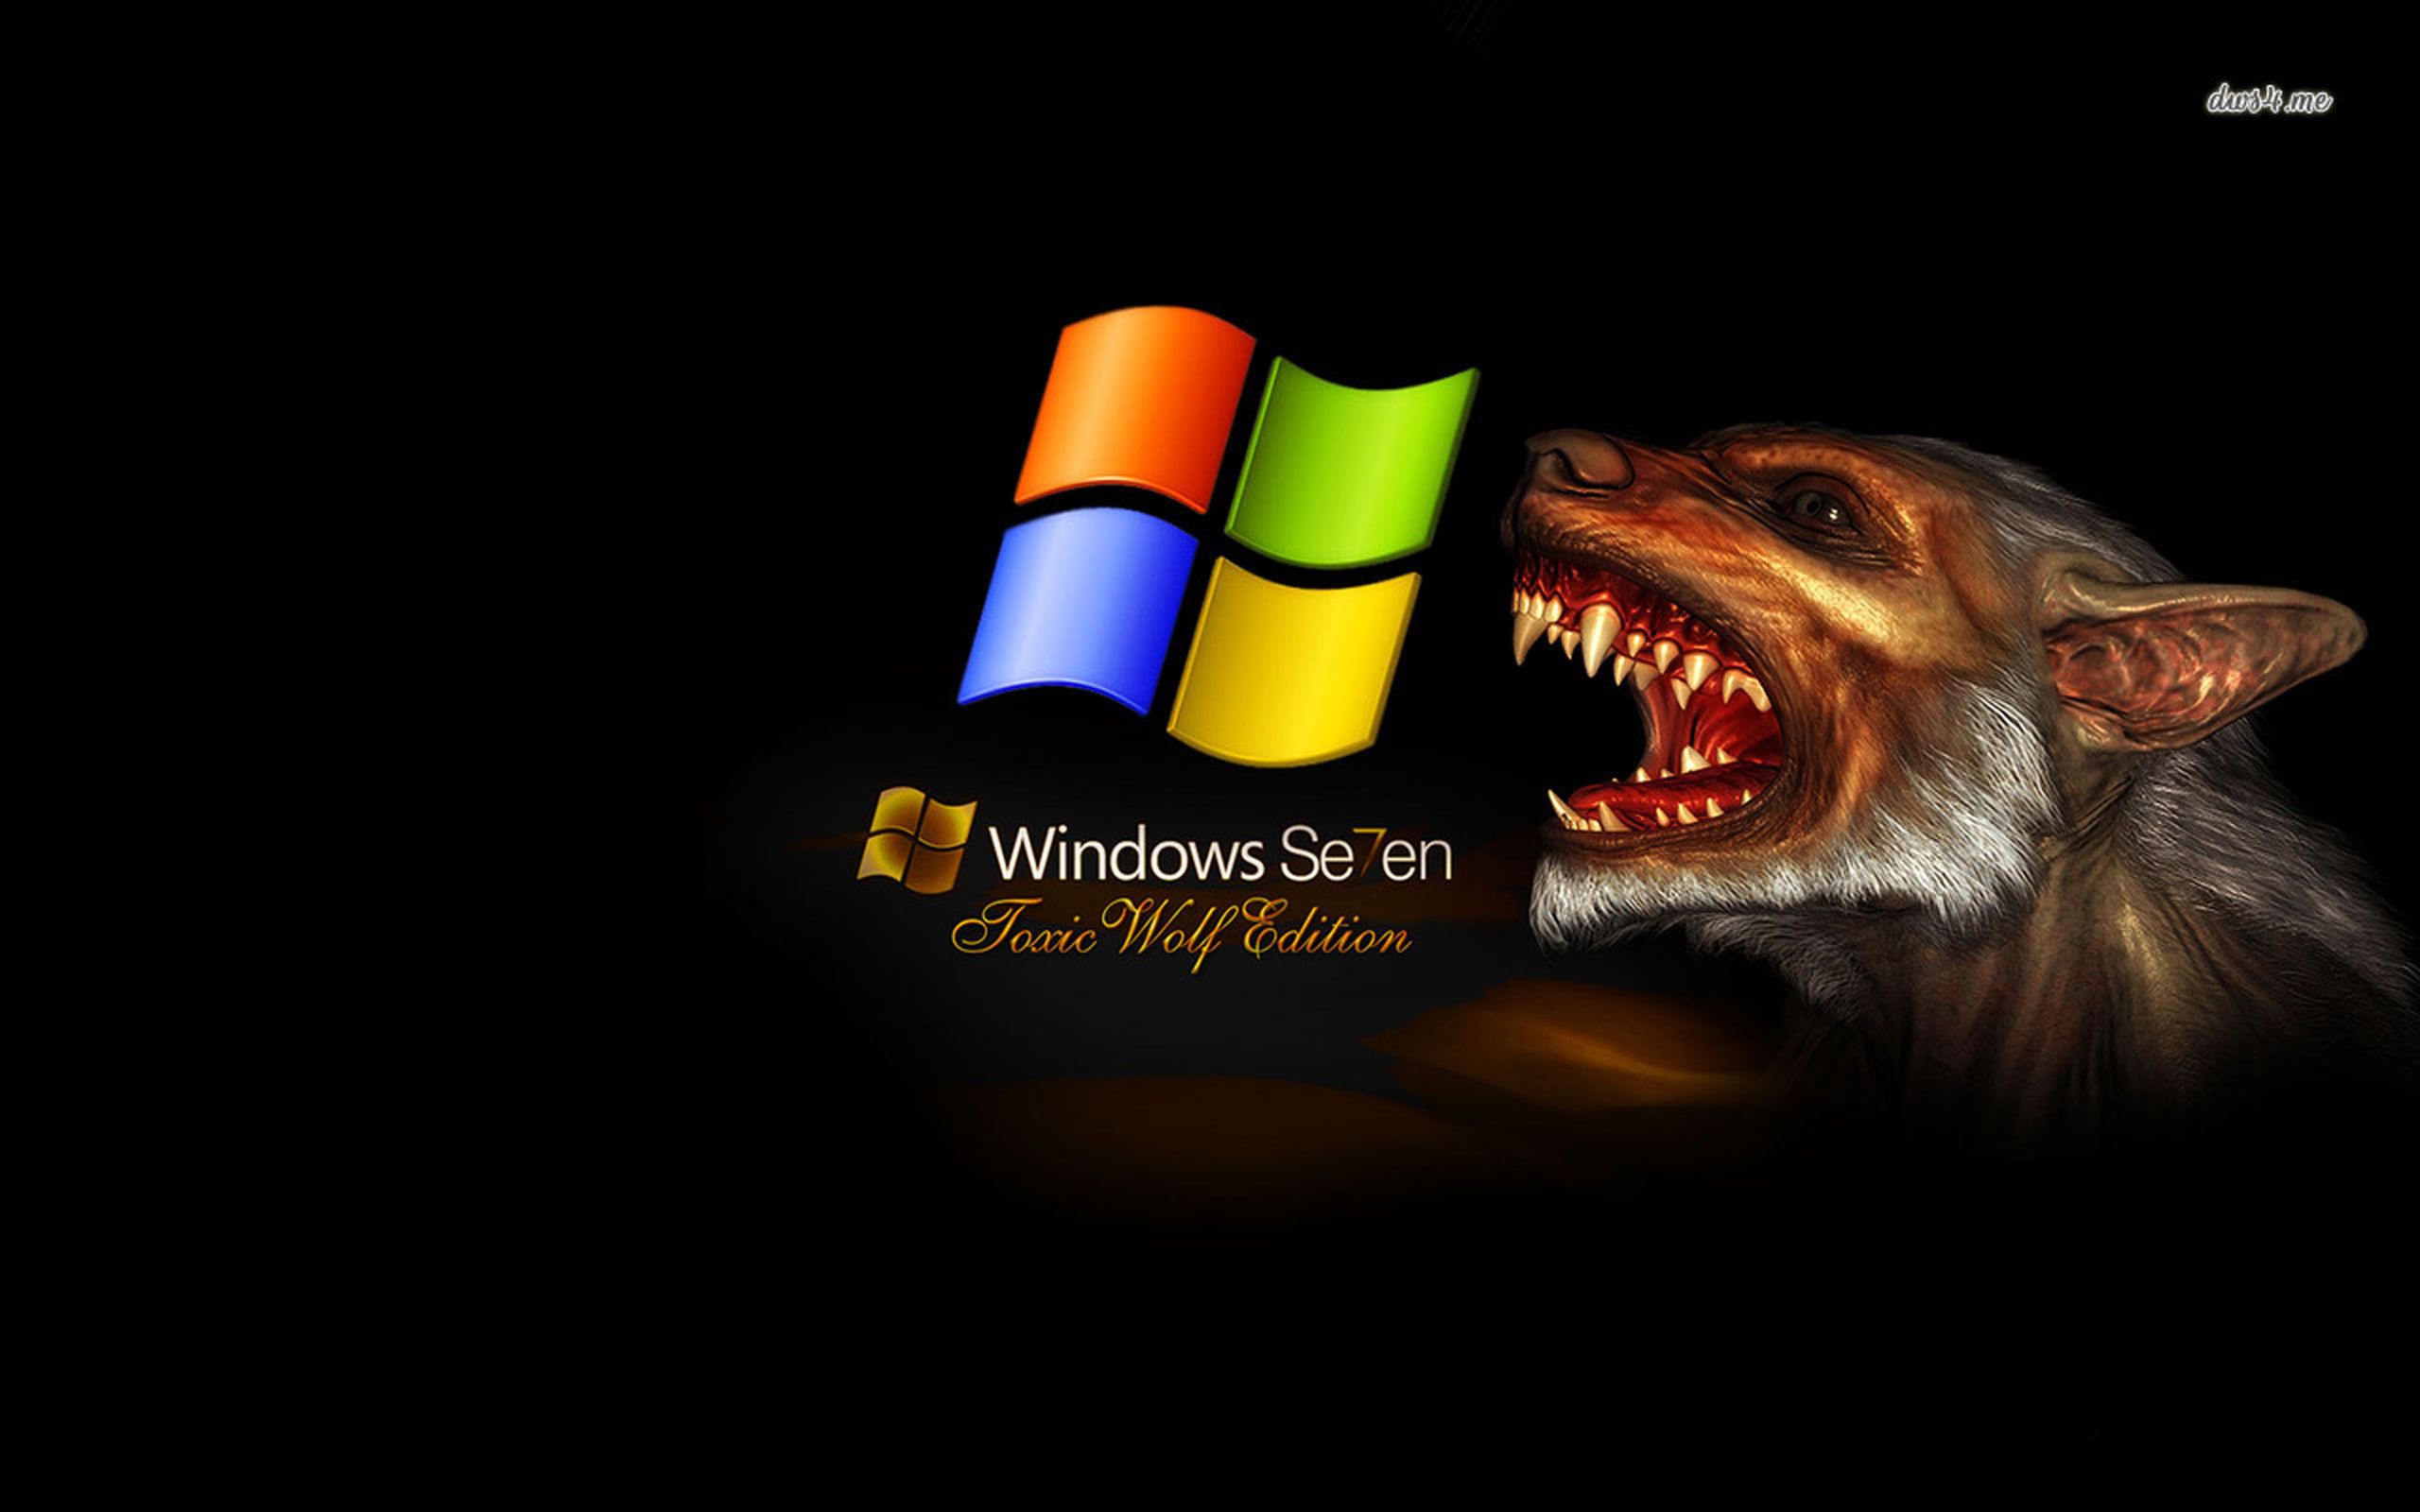 Windows 7 Toxic Wolf Edition 1280x800 Computer Wallpaper 20808